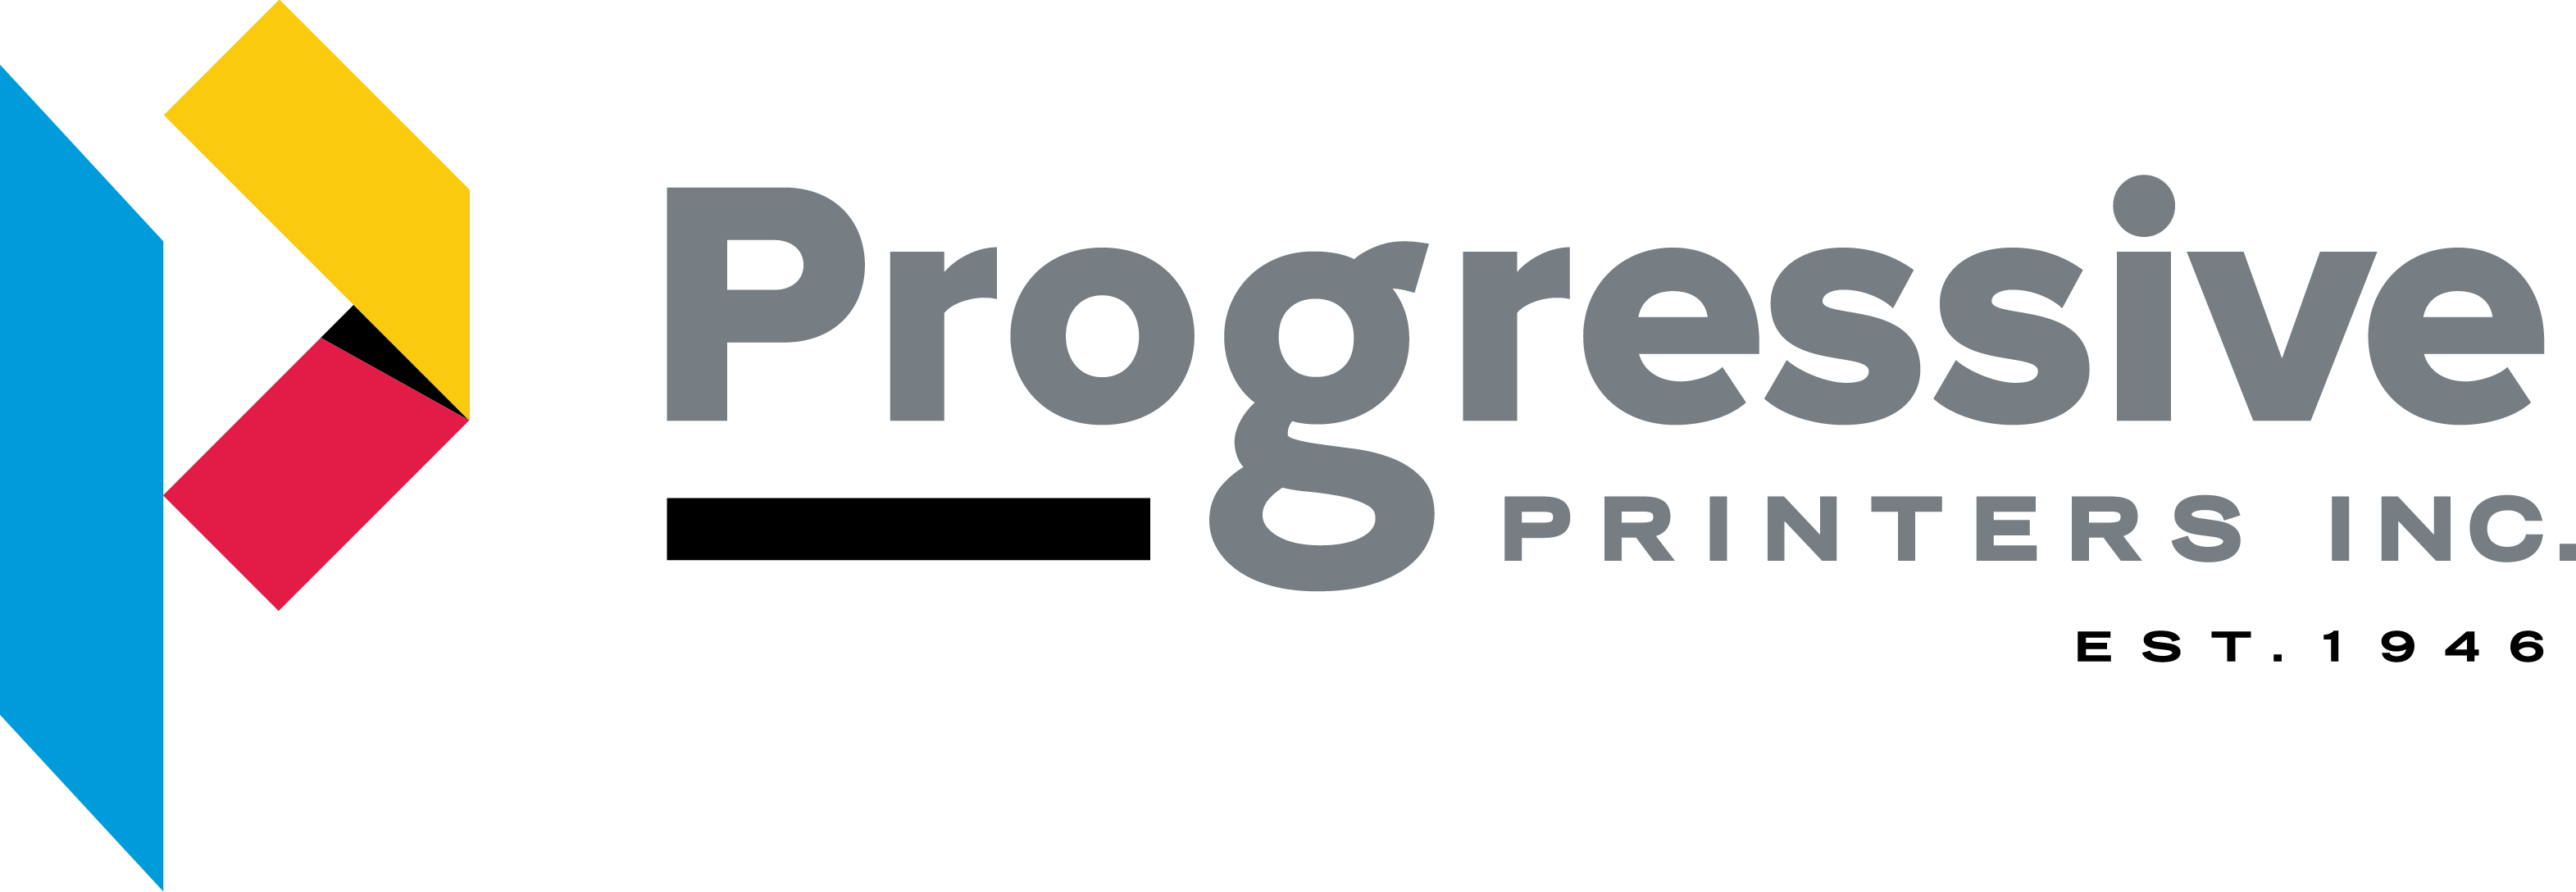 Progressive Printers Inc.